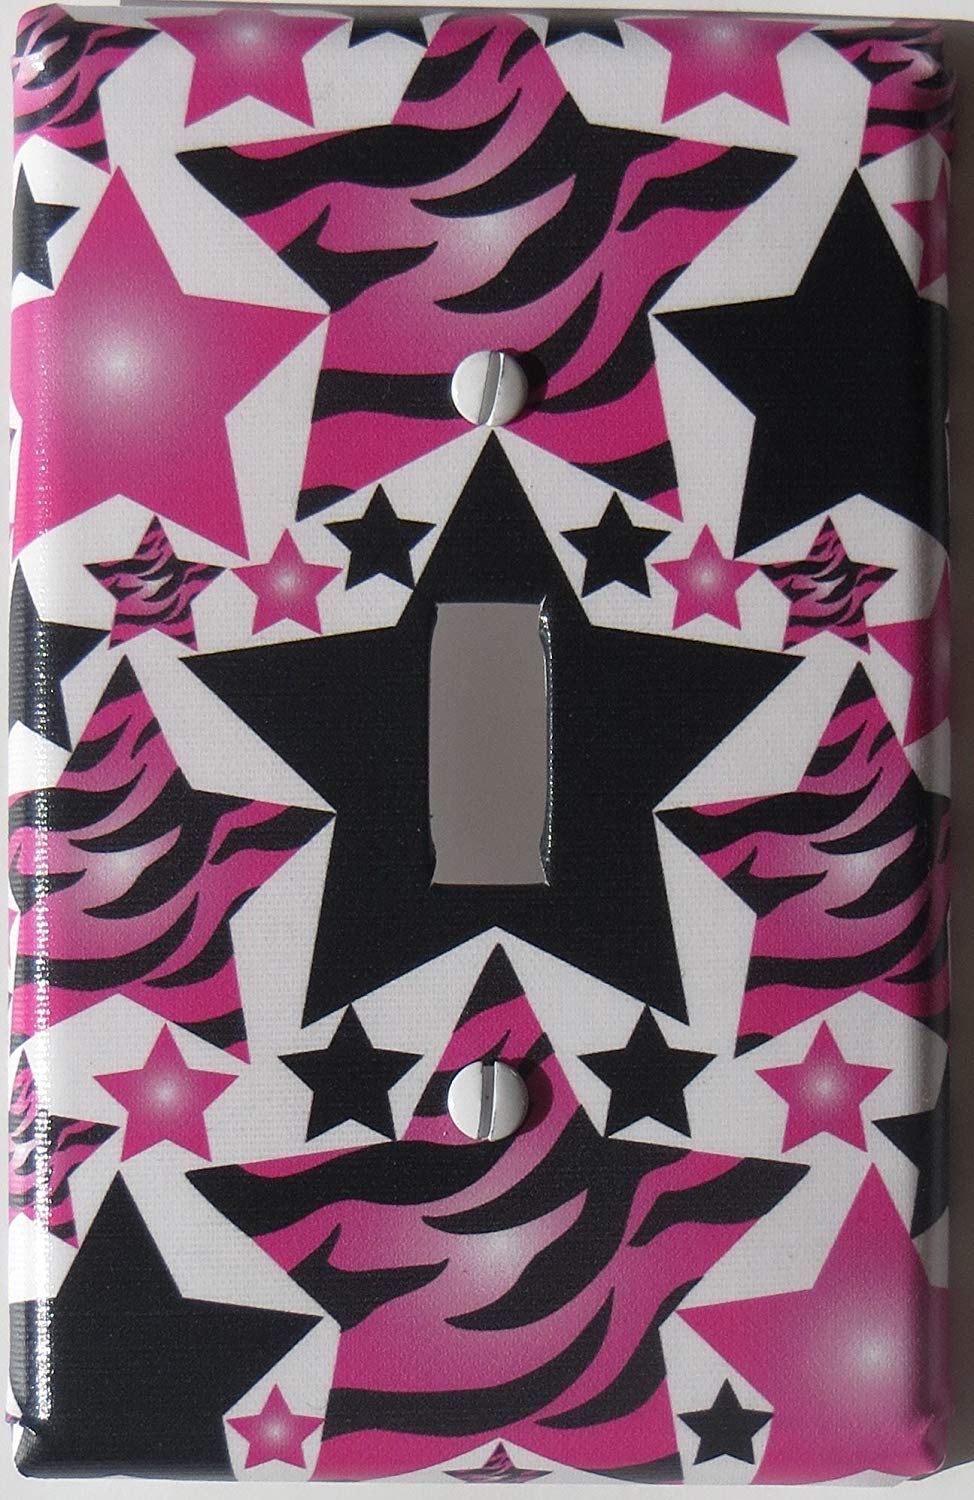 Hot Pink Zebra Stars Light Switch Plate Cover